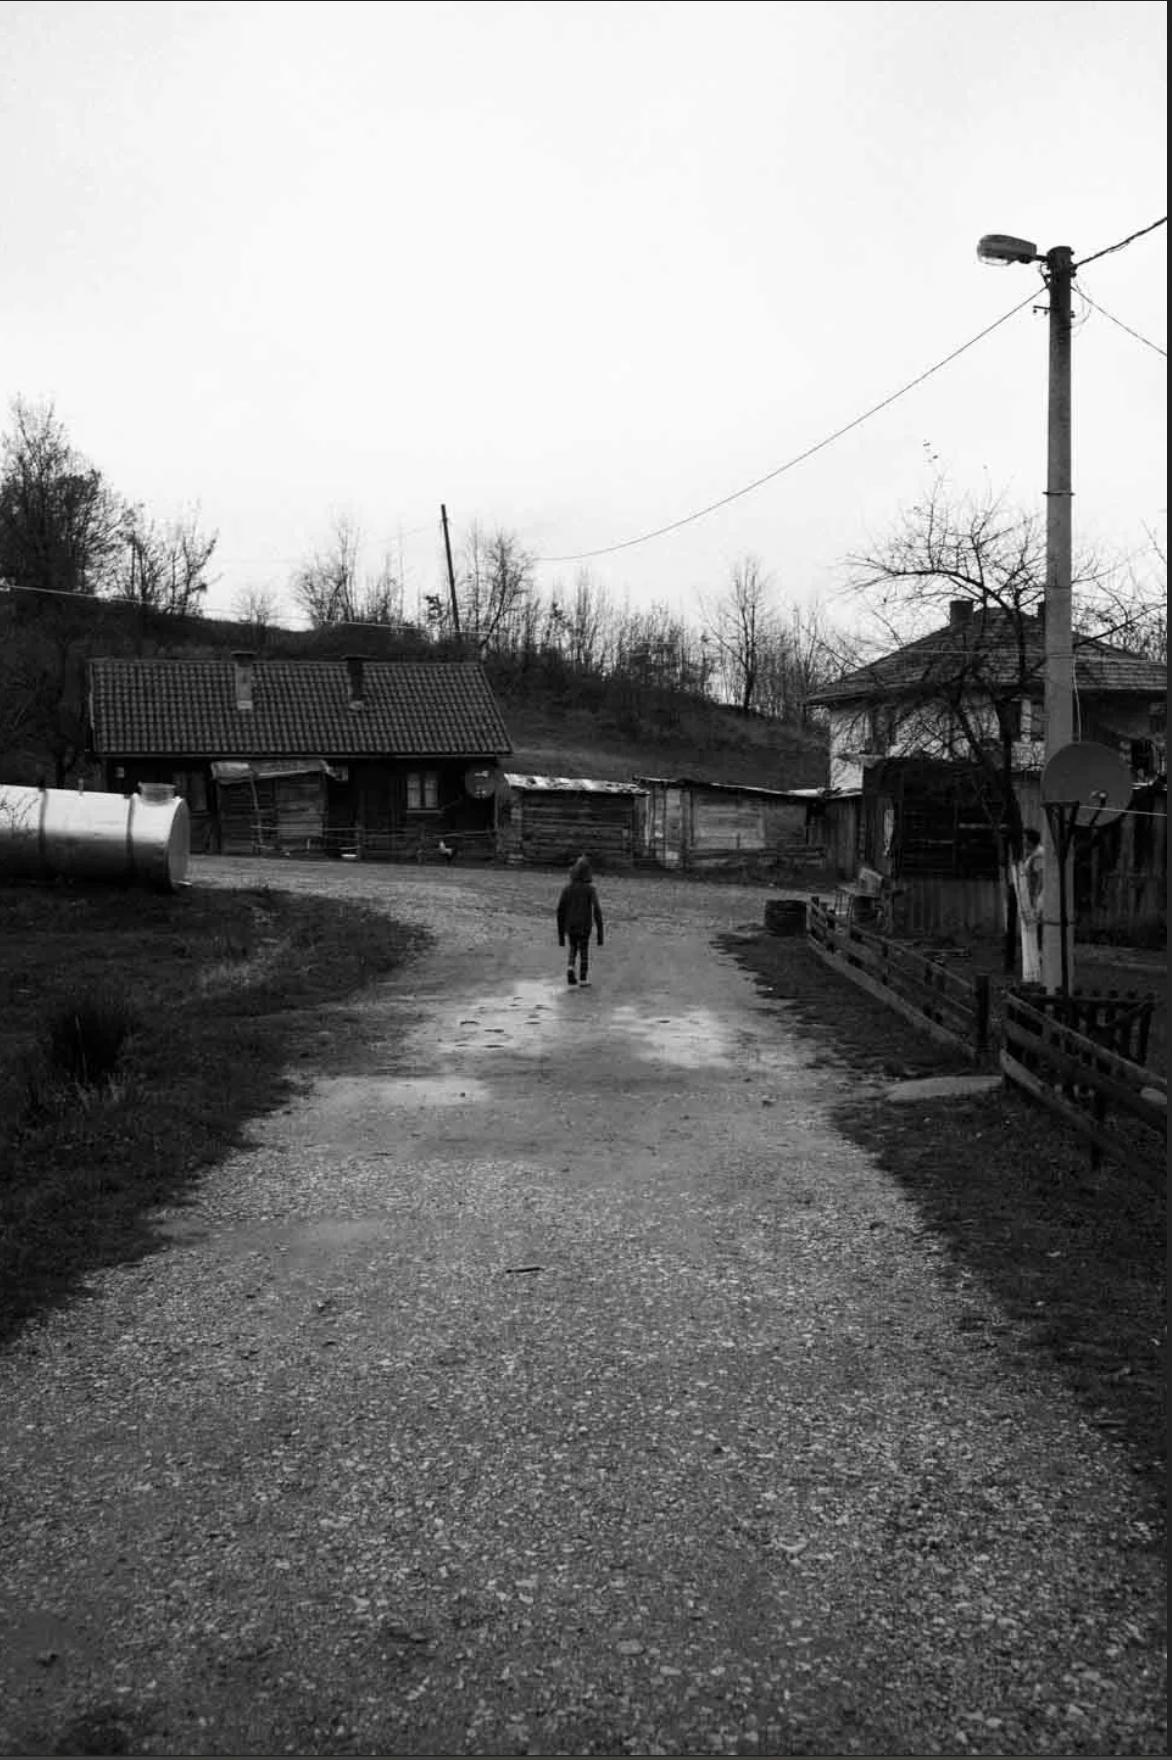 Mrdici, a refugee camp in Banovići. Image by Jošt Franko. Bosnia and Herzegovina, undated.

